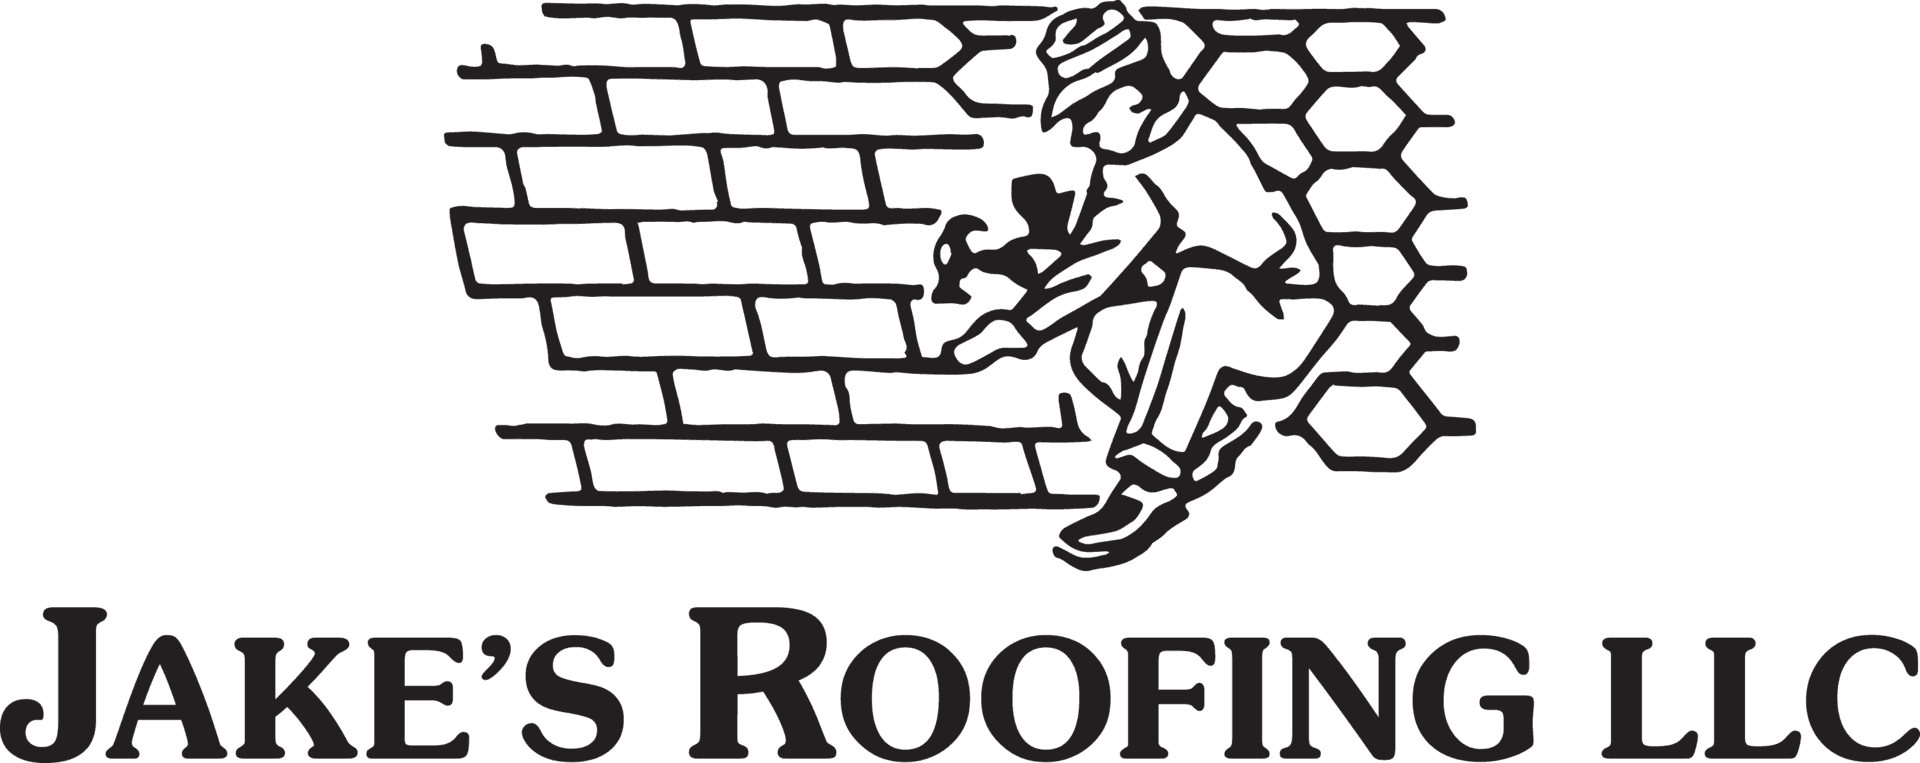 Jake's Roofing, LLC - Logo